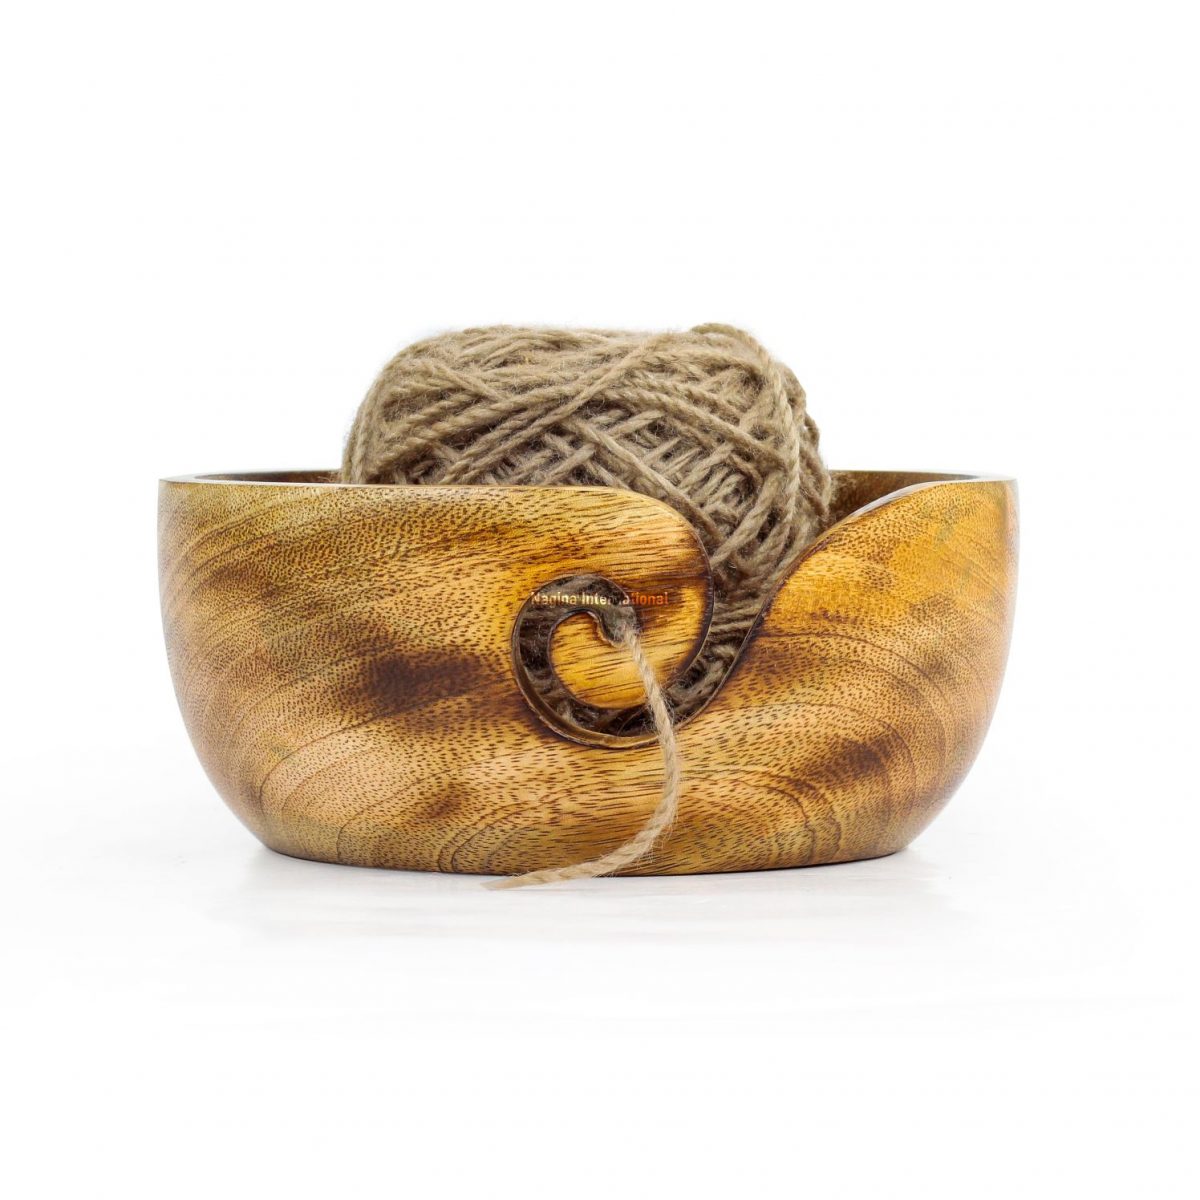 Mango Wood Yarn Storage Bowl | Premium Yarn Storage Bowl for Yarn Balls & Skeins | Crochet & Knitting Bowls Made Out of Mango Wood | Knitter's Gift & Notions